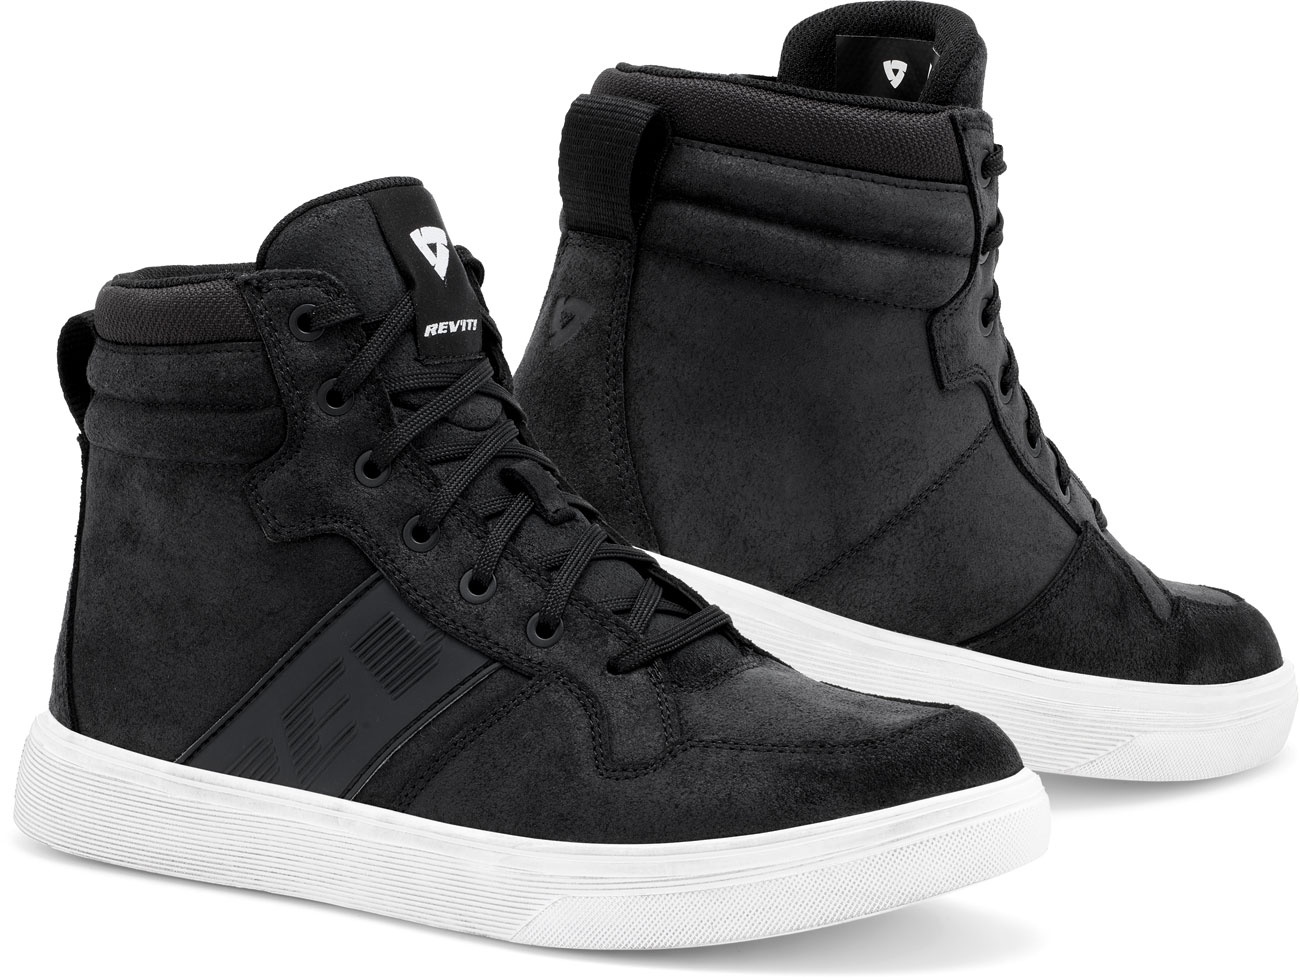 Revit Kick, chaussures - Noir/Blanc - 43 EU